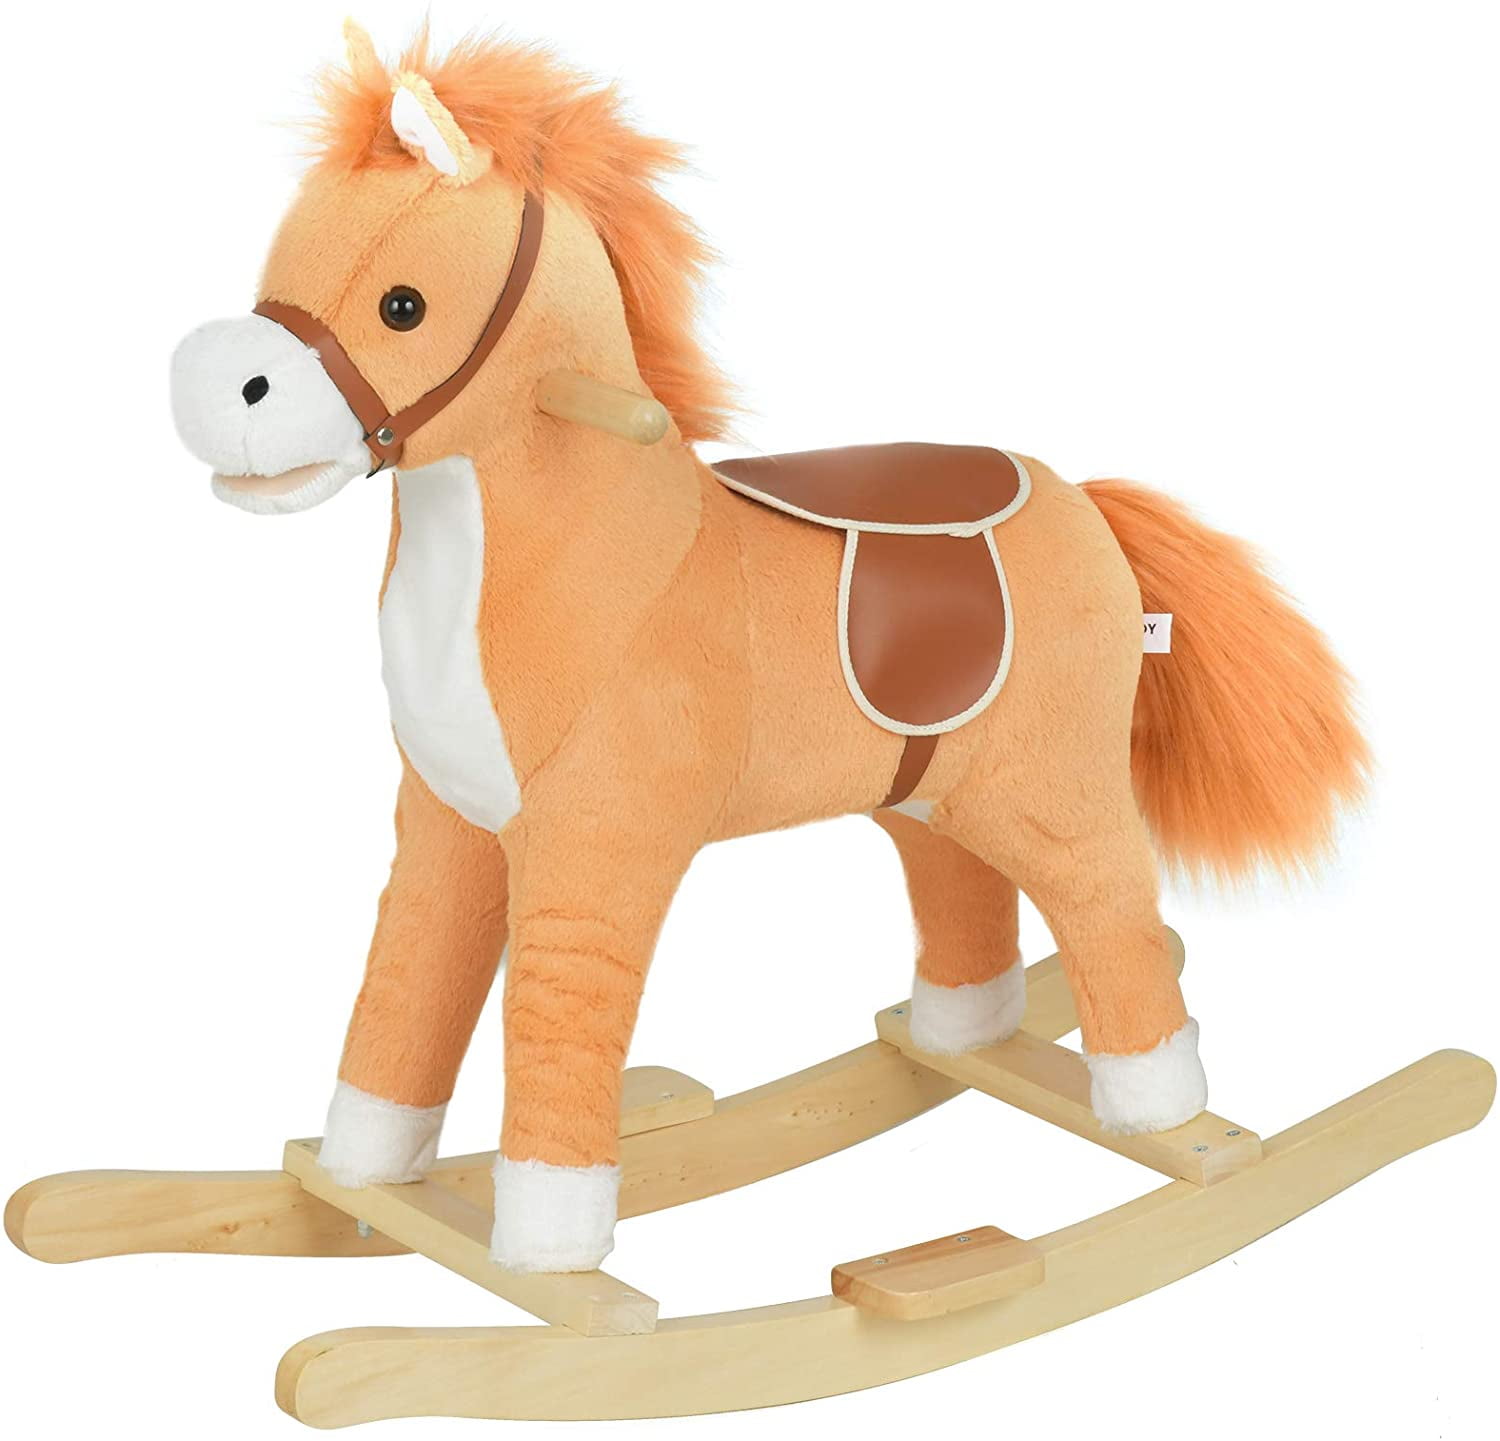 Grooming Sponge 'Barn Buddy'  2-Pack – HorseHaus - Fine Equestrian Supplies